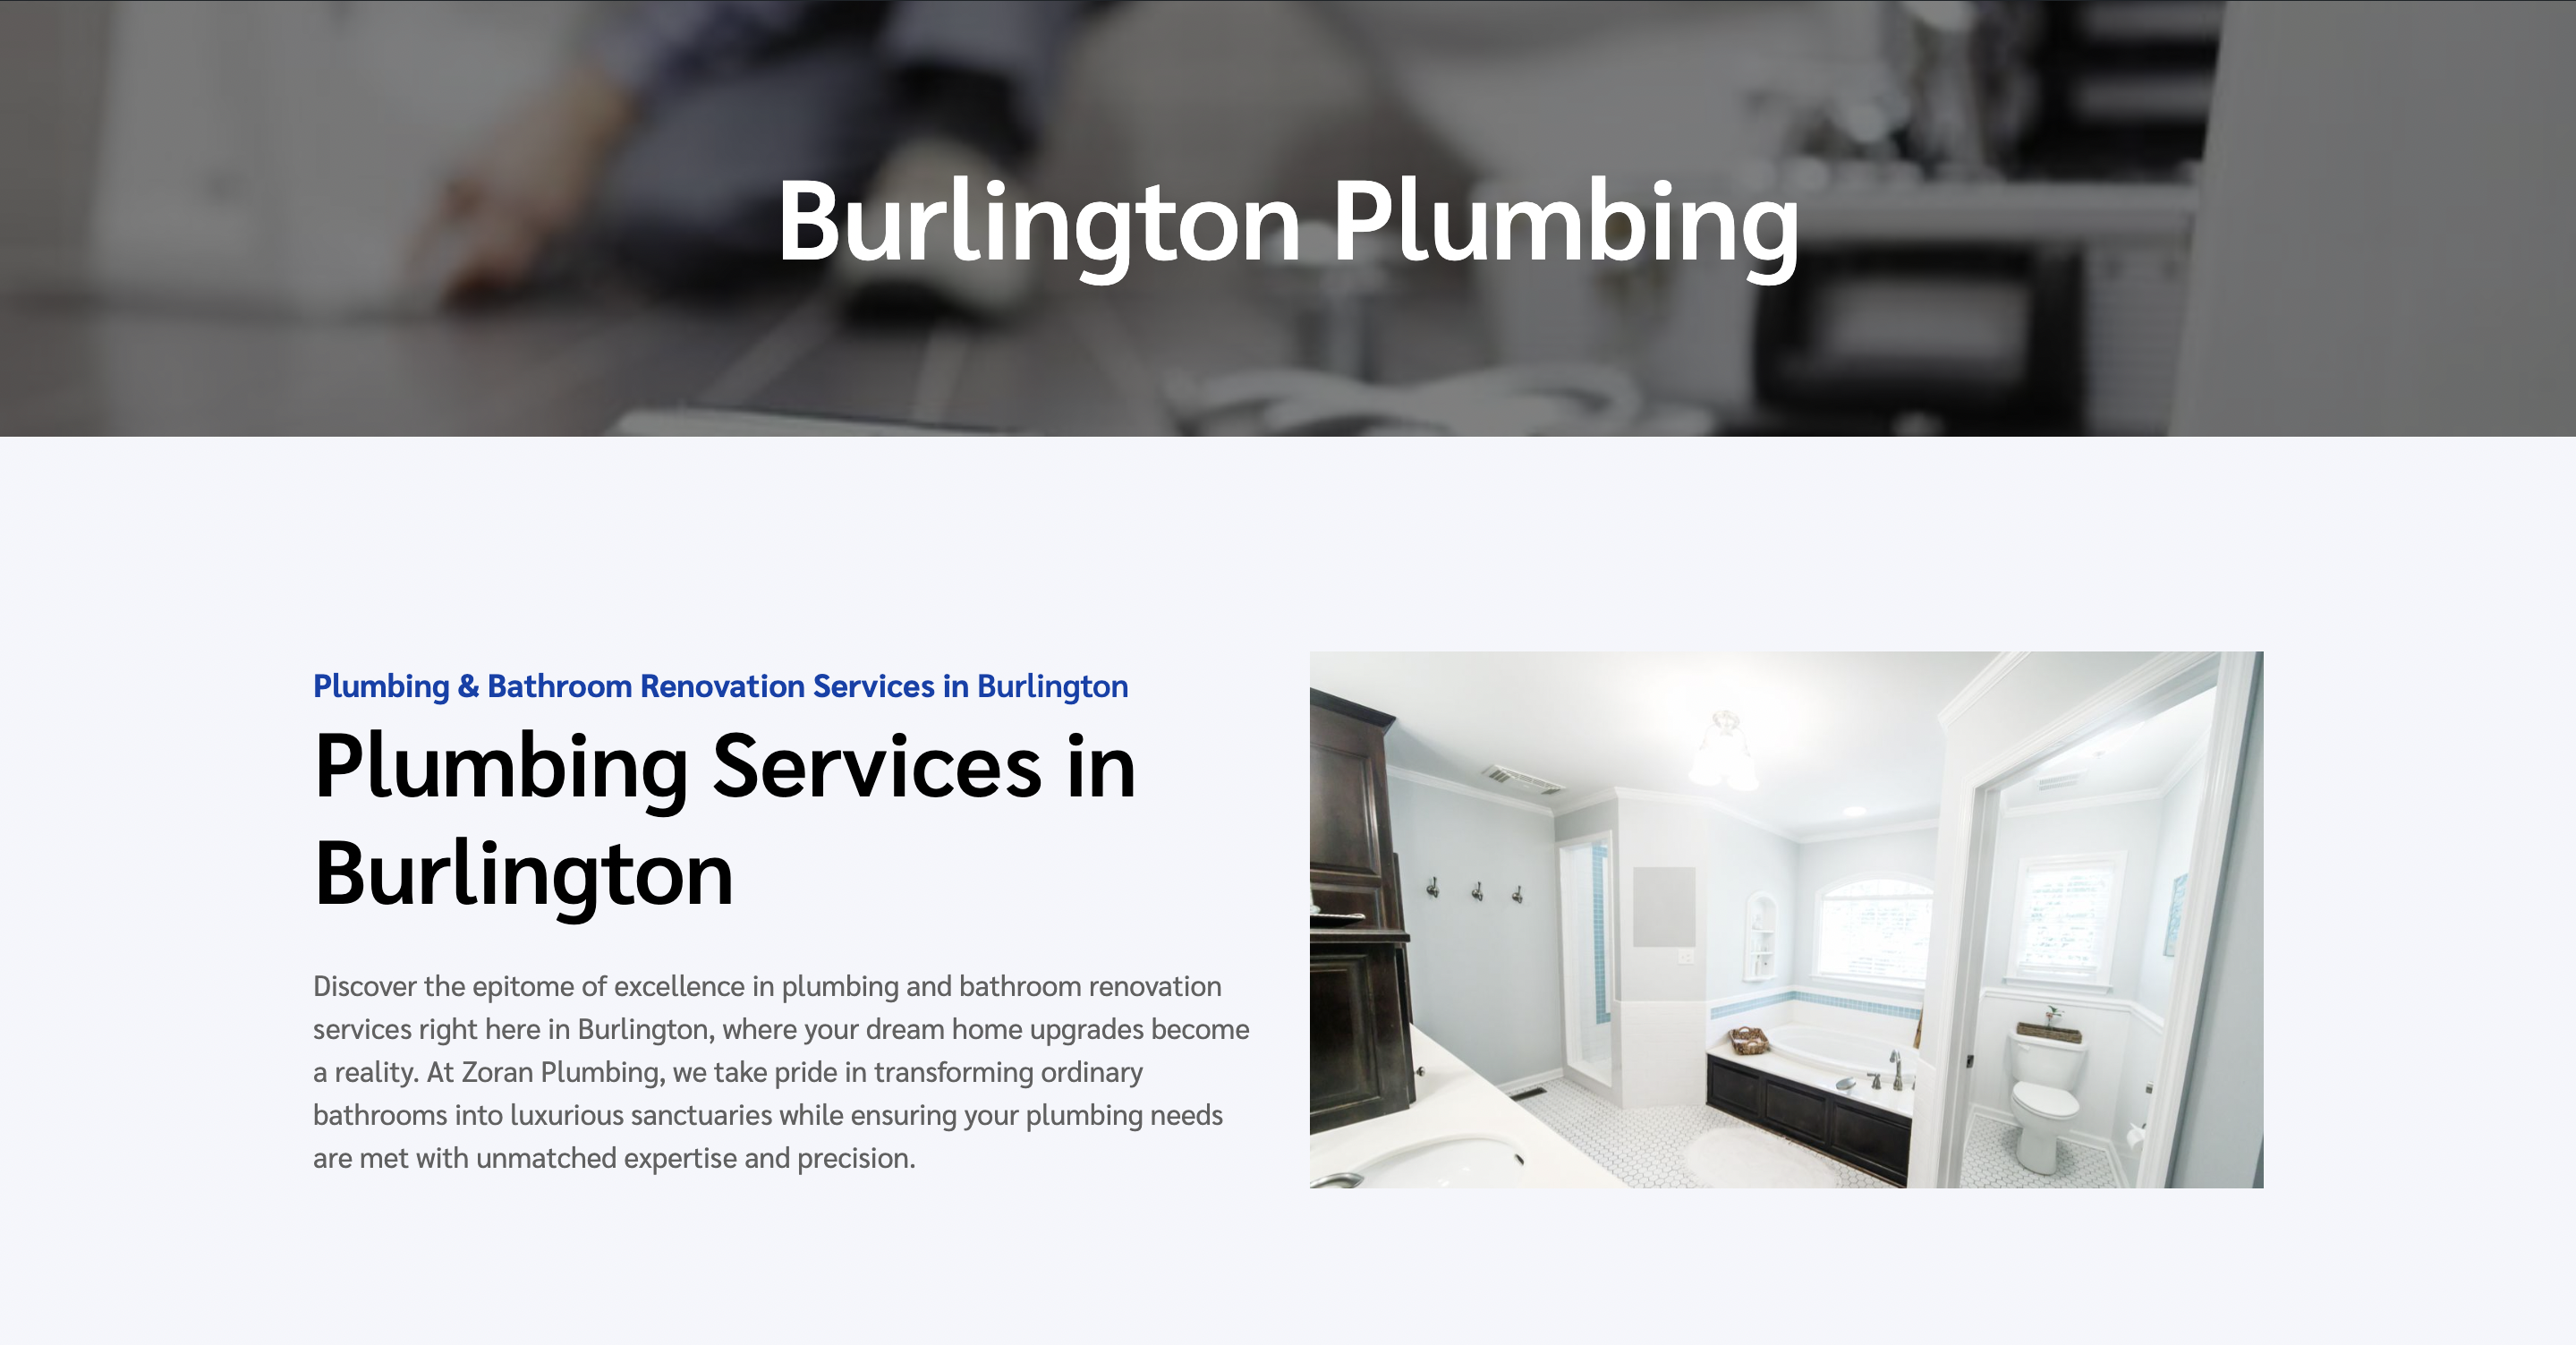 Bathroom renovations and plumbing in Burlington